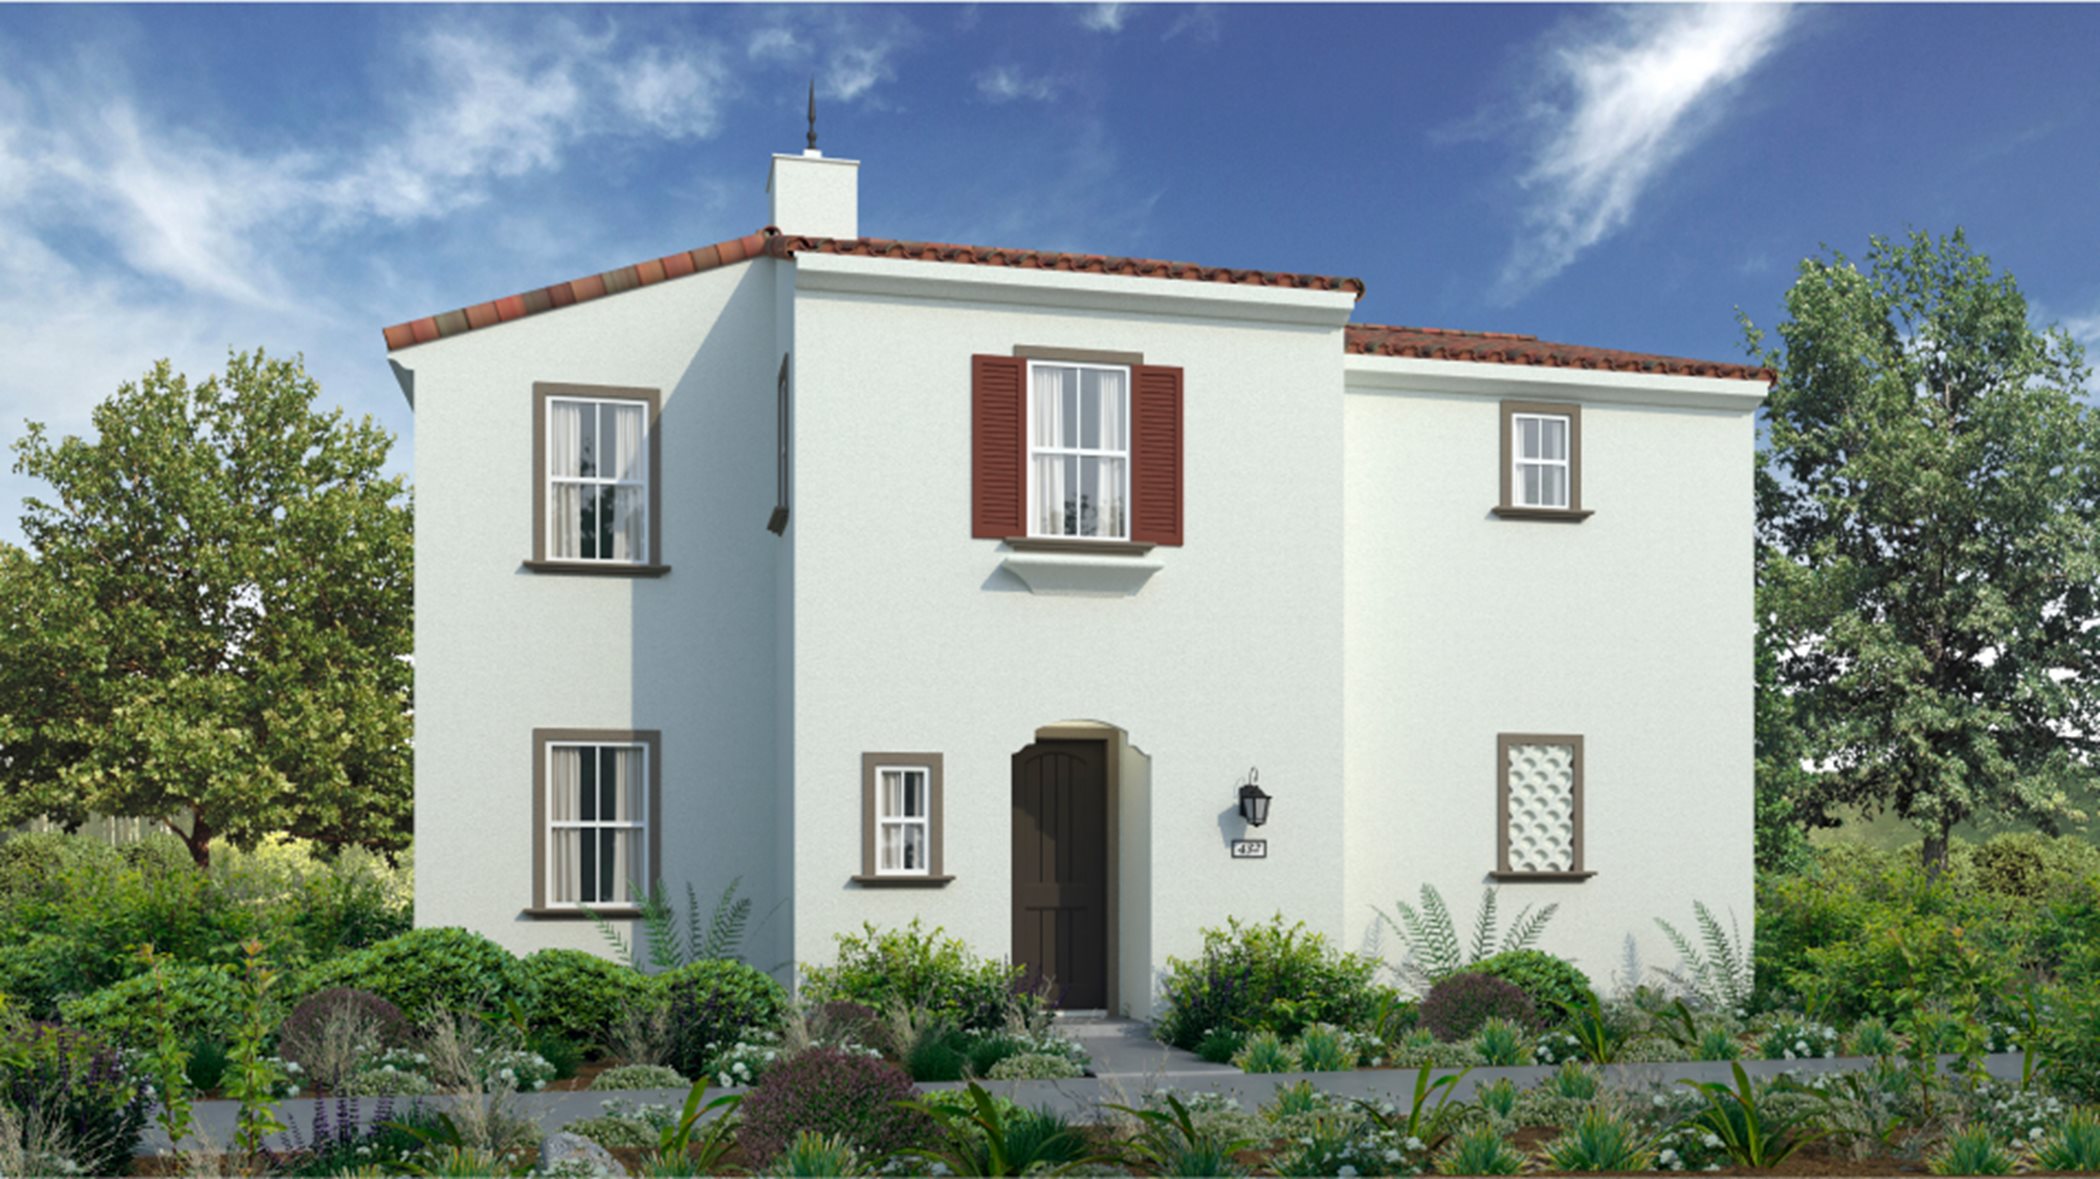 Spanish home exterior image